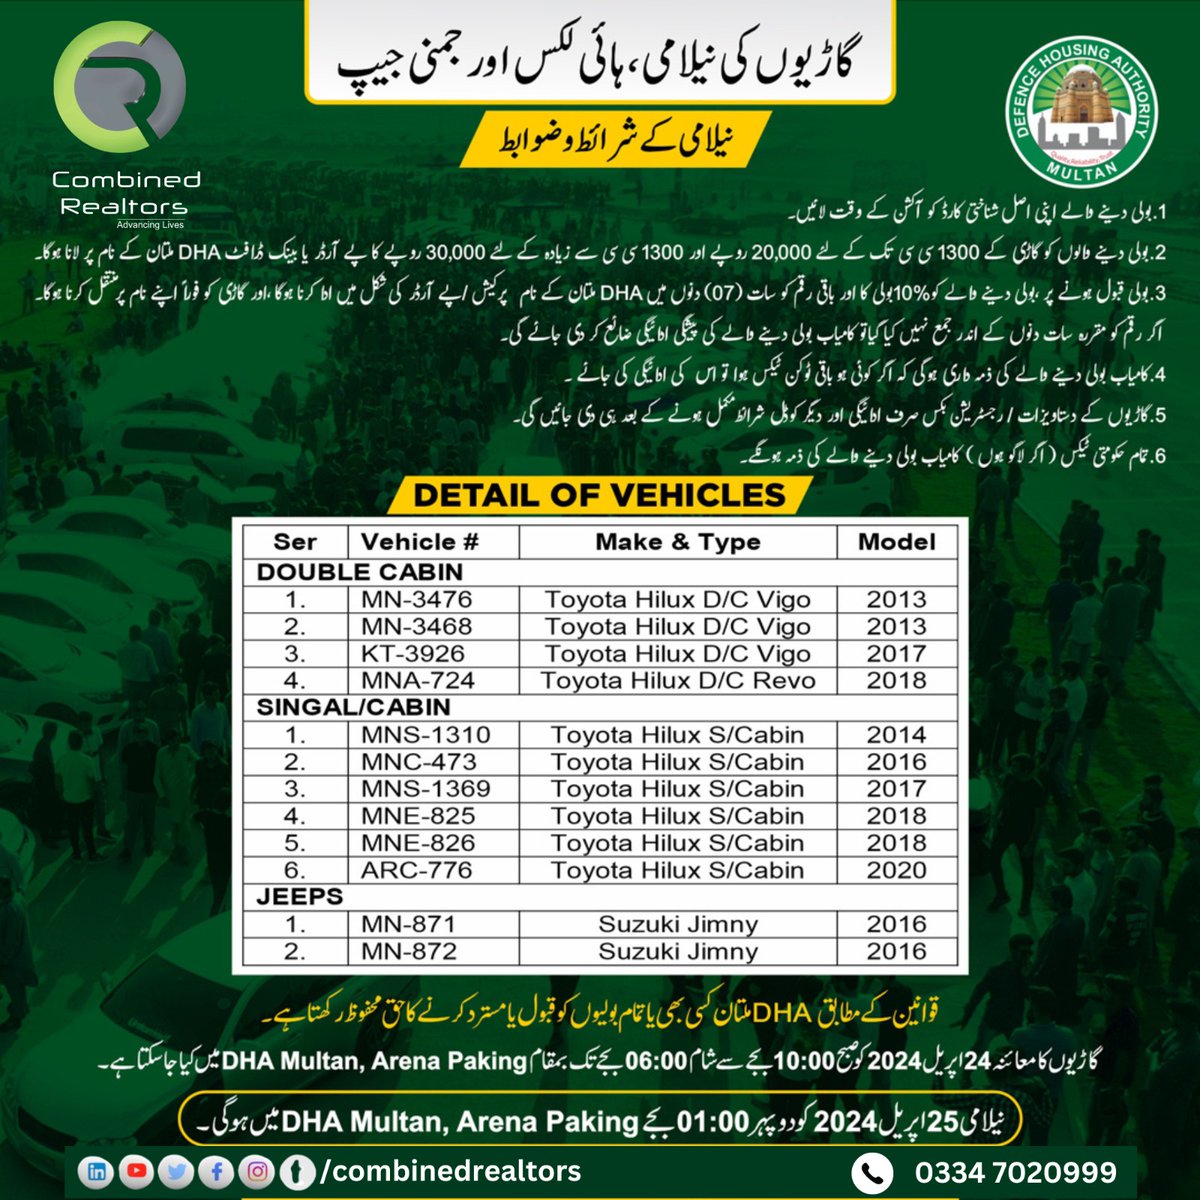 Auction of Vehicles
#combinedrealtors #DHAMultan #VehicleAuction #DefenceHousingAuthority #dham #VehicleAuction #Multan